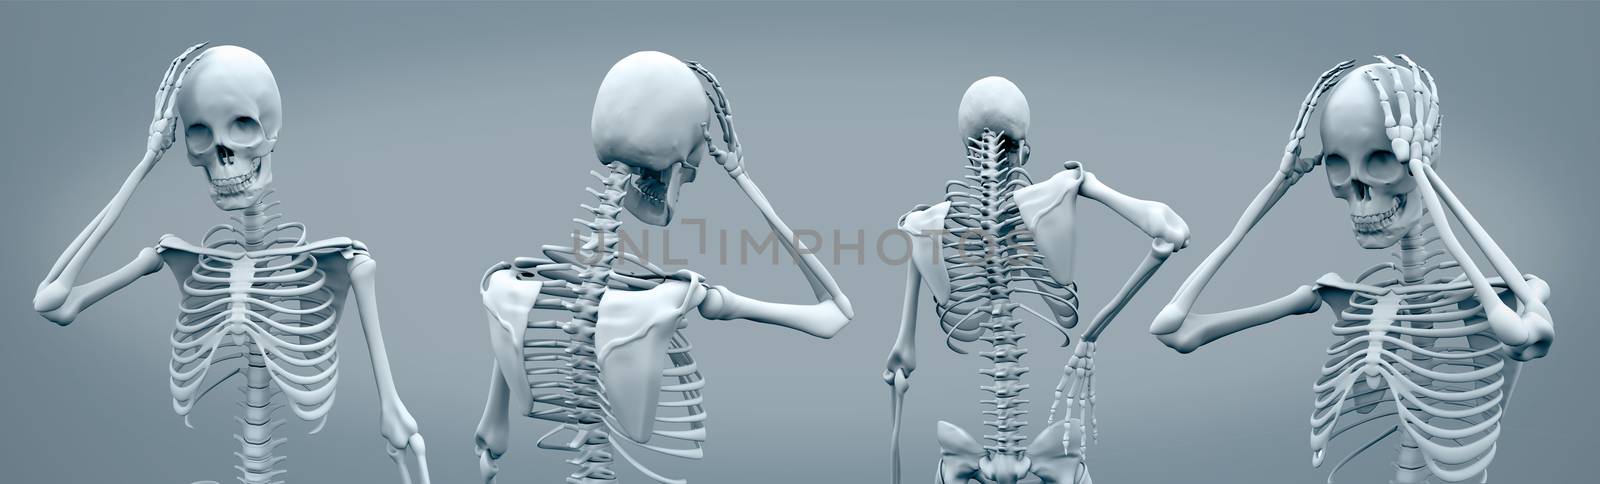 Skeletons having headaches by Wavebreakmedia